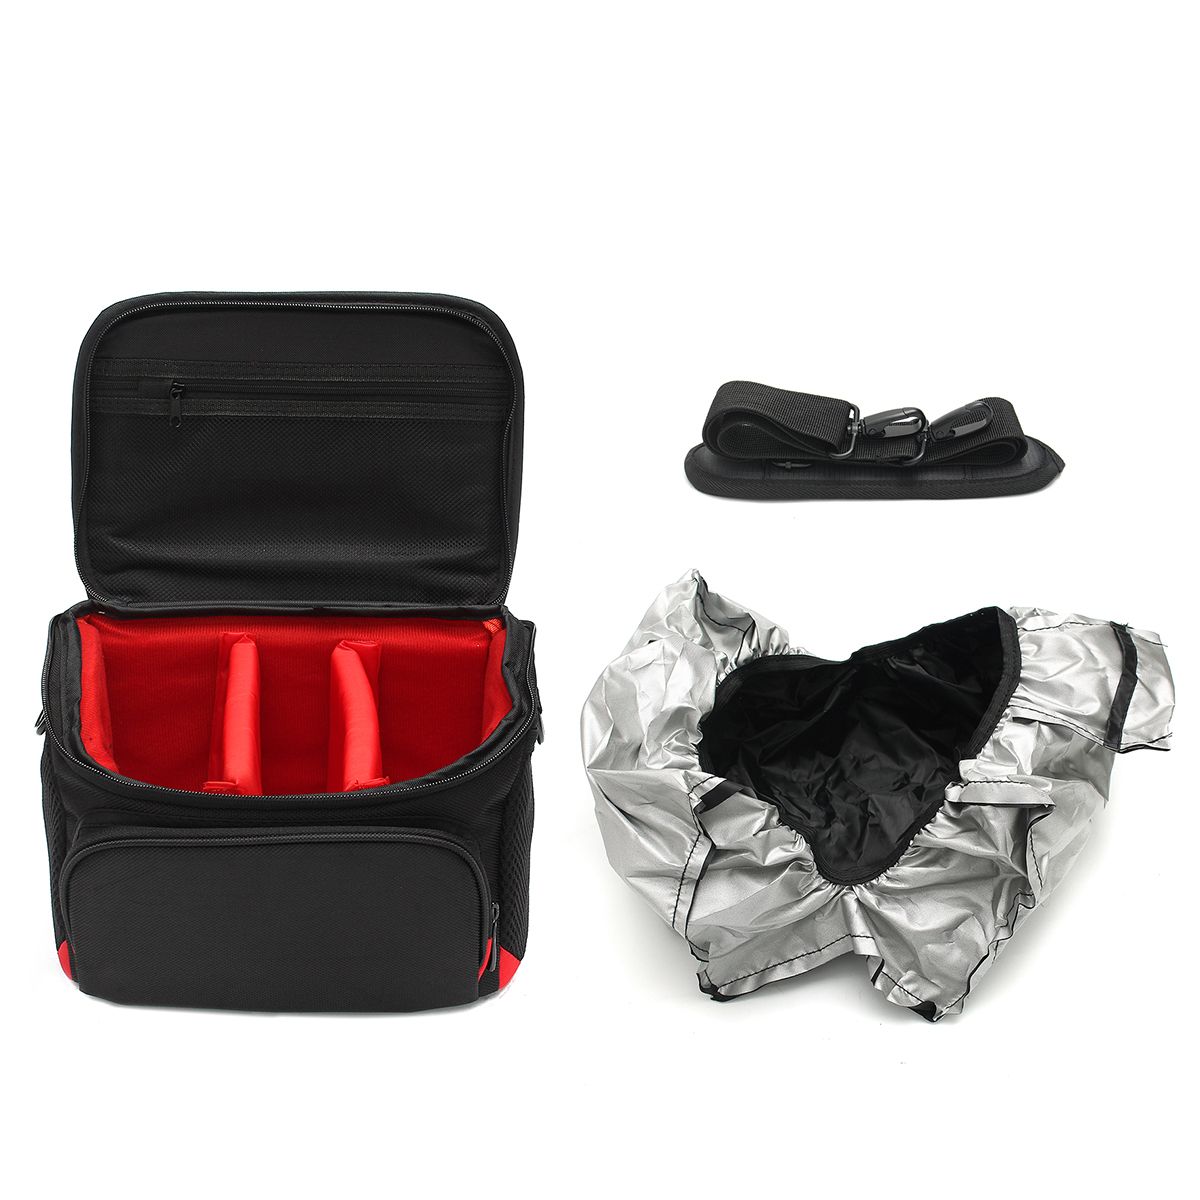 Waterproof-Camera-Shoulder-Bag-Travel-Carrying-Case-with-Rain-Cover-For-DSLR-SLR-Camera-Flash-Lens-1633799